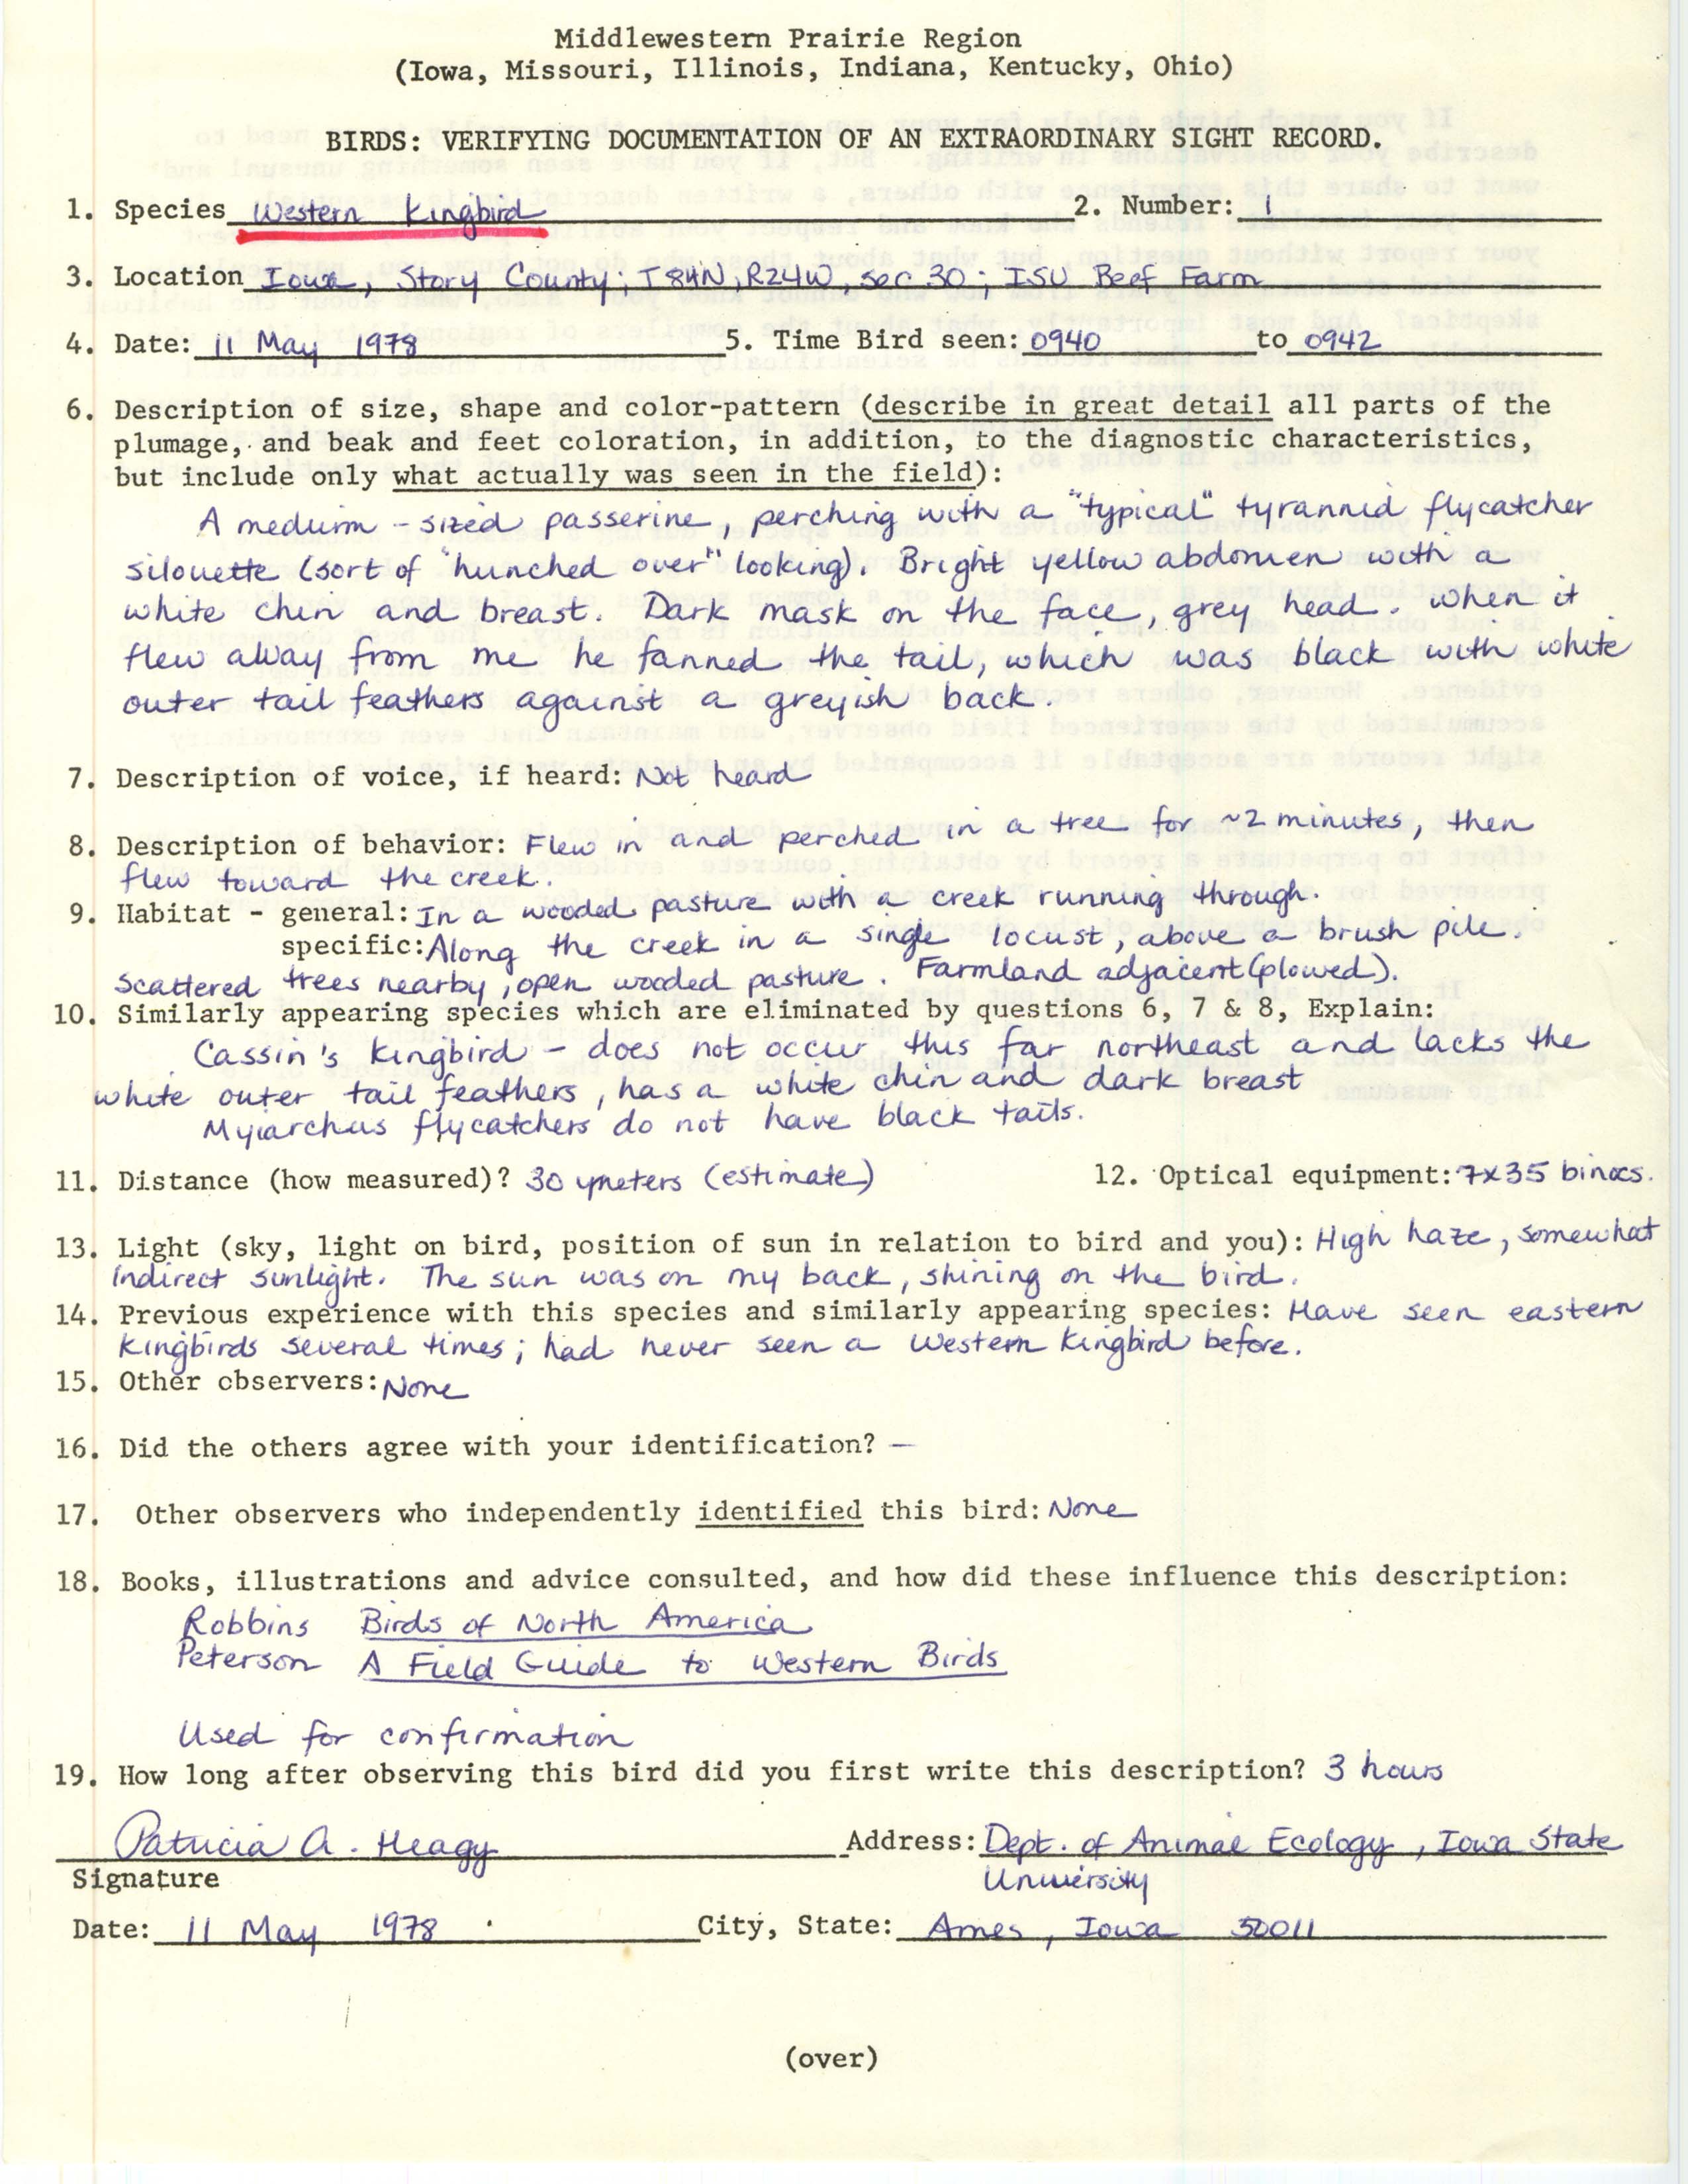 Rare bird documentation form for Western Kingbird near Ames, 1978